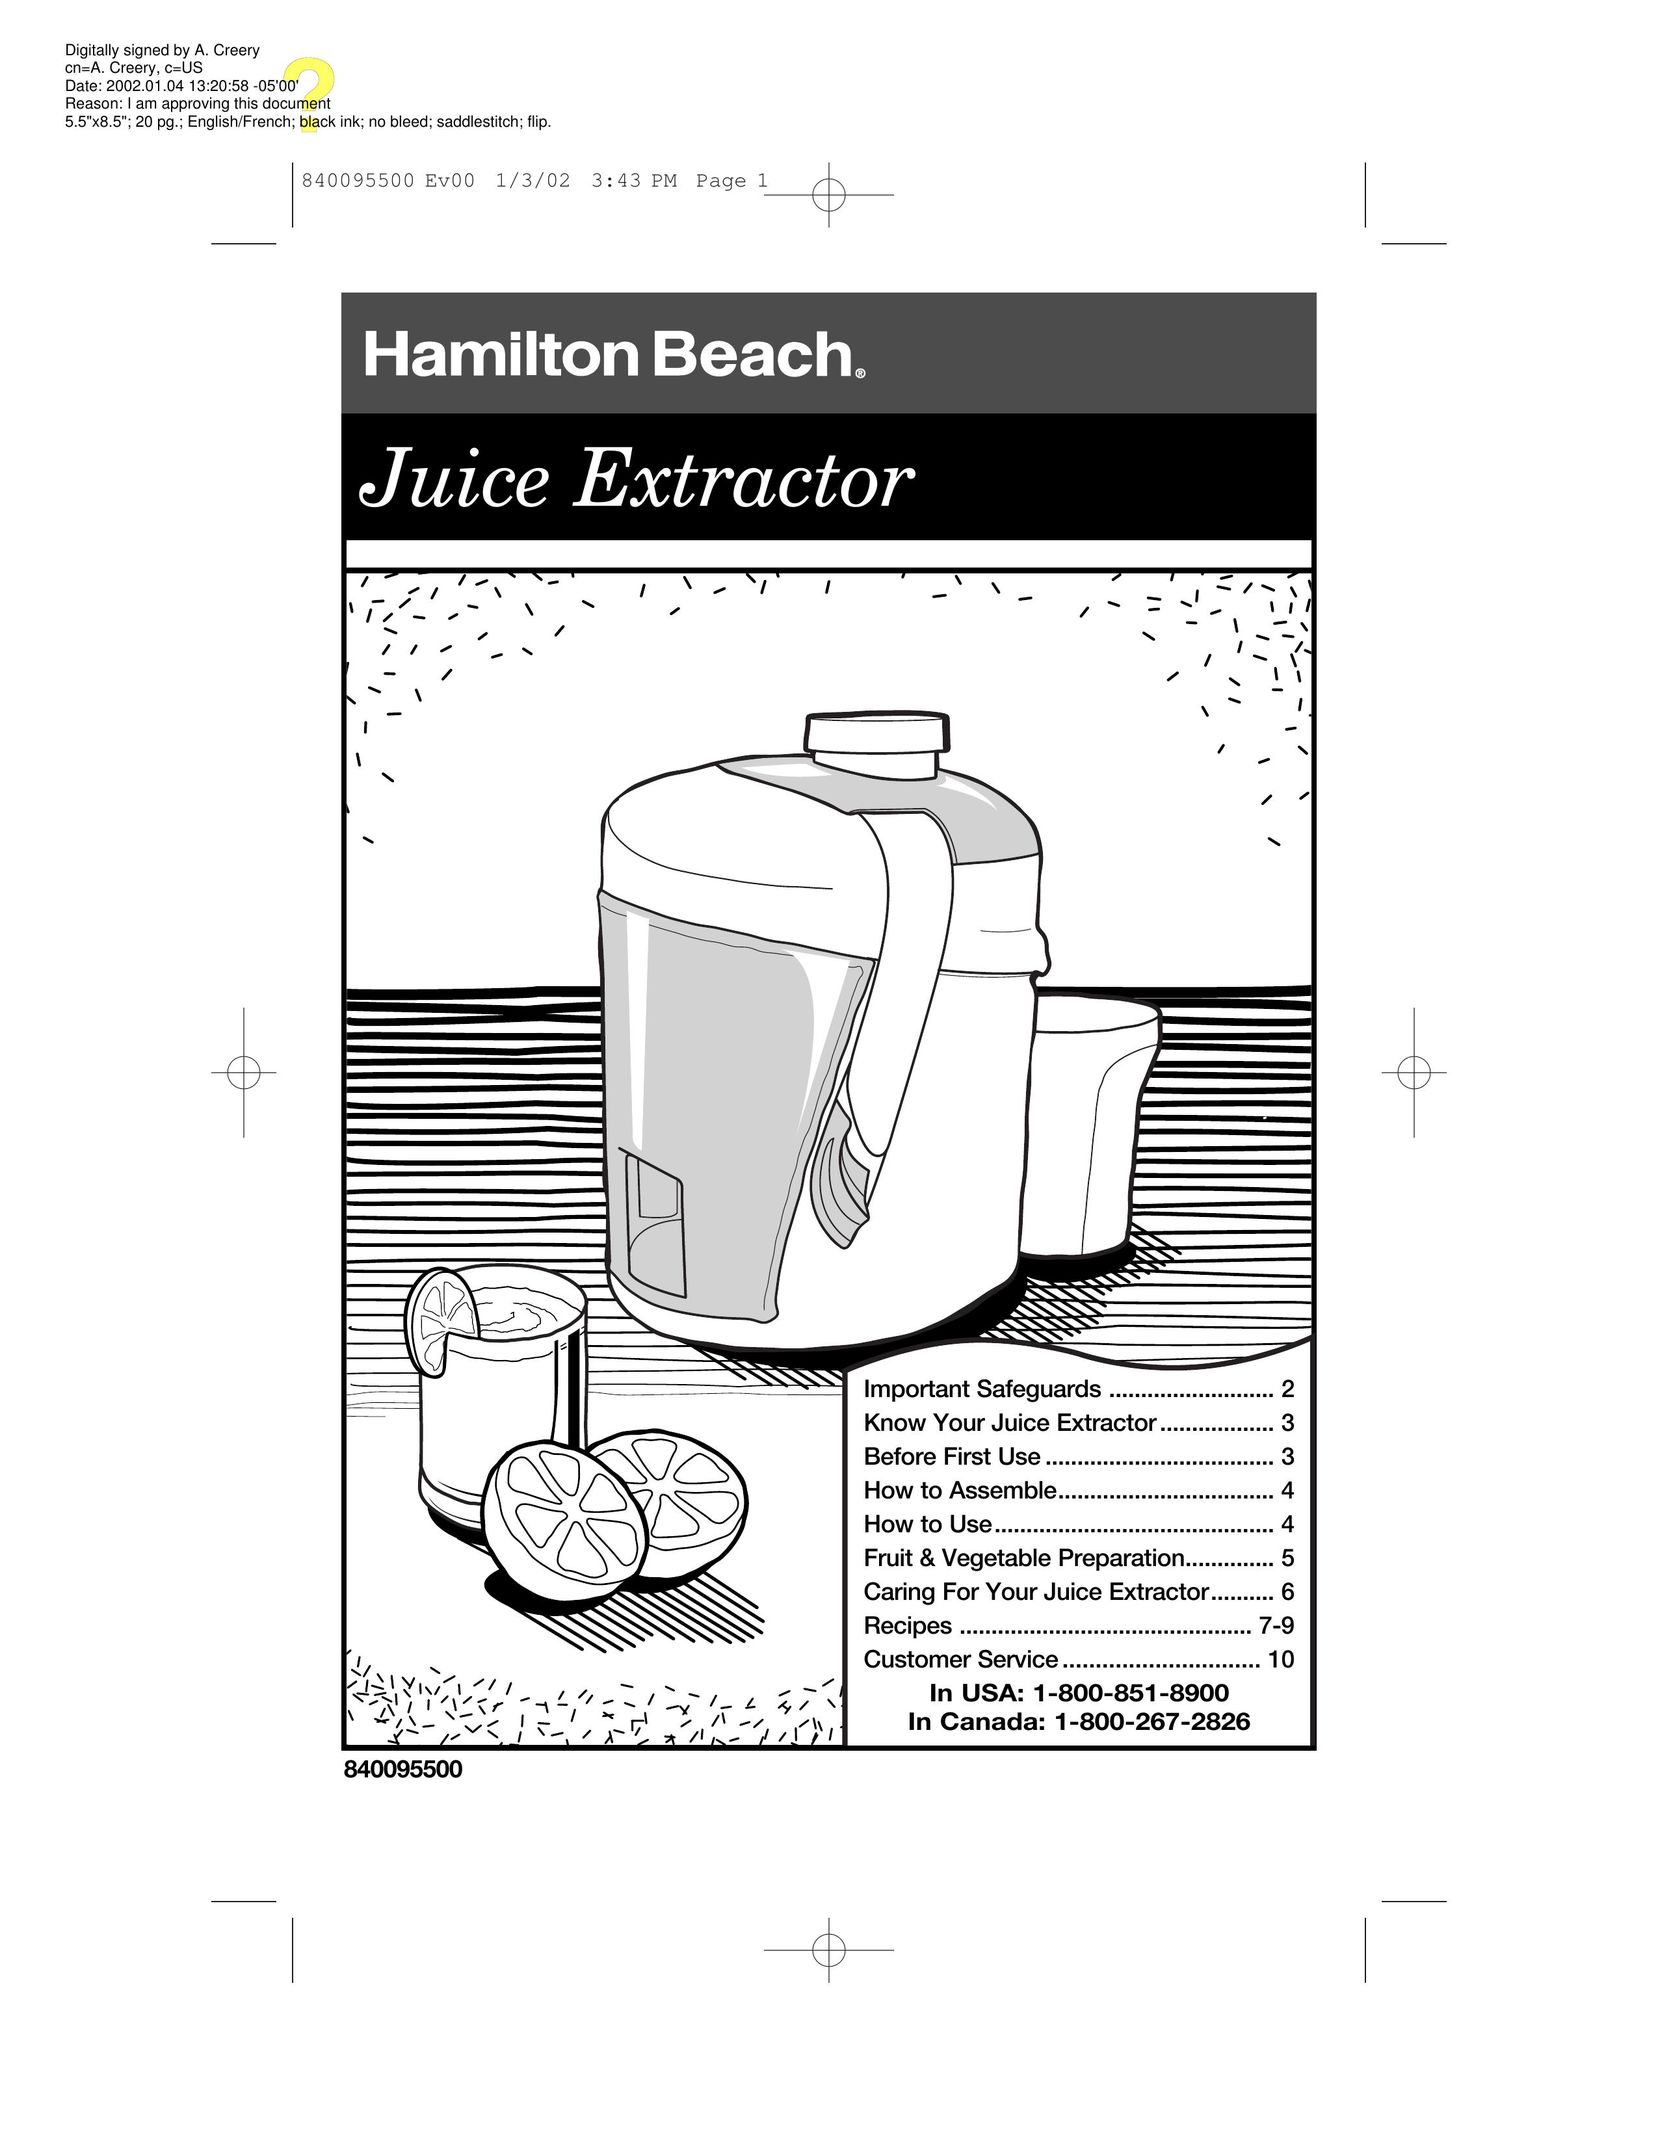 Hamilton Beach 840095500 Stereo System User Manual